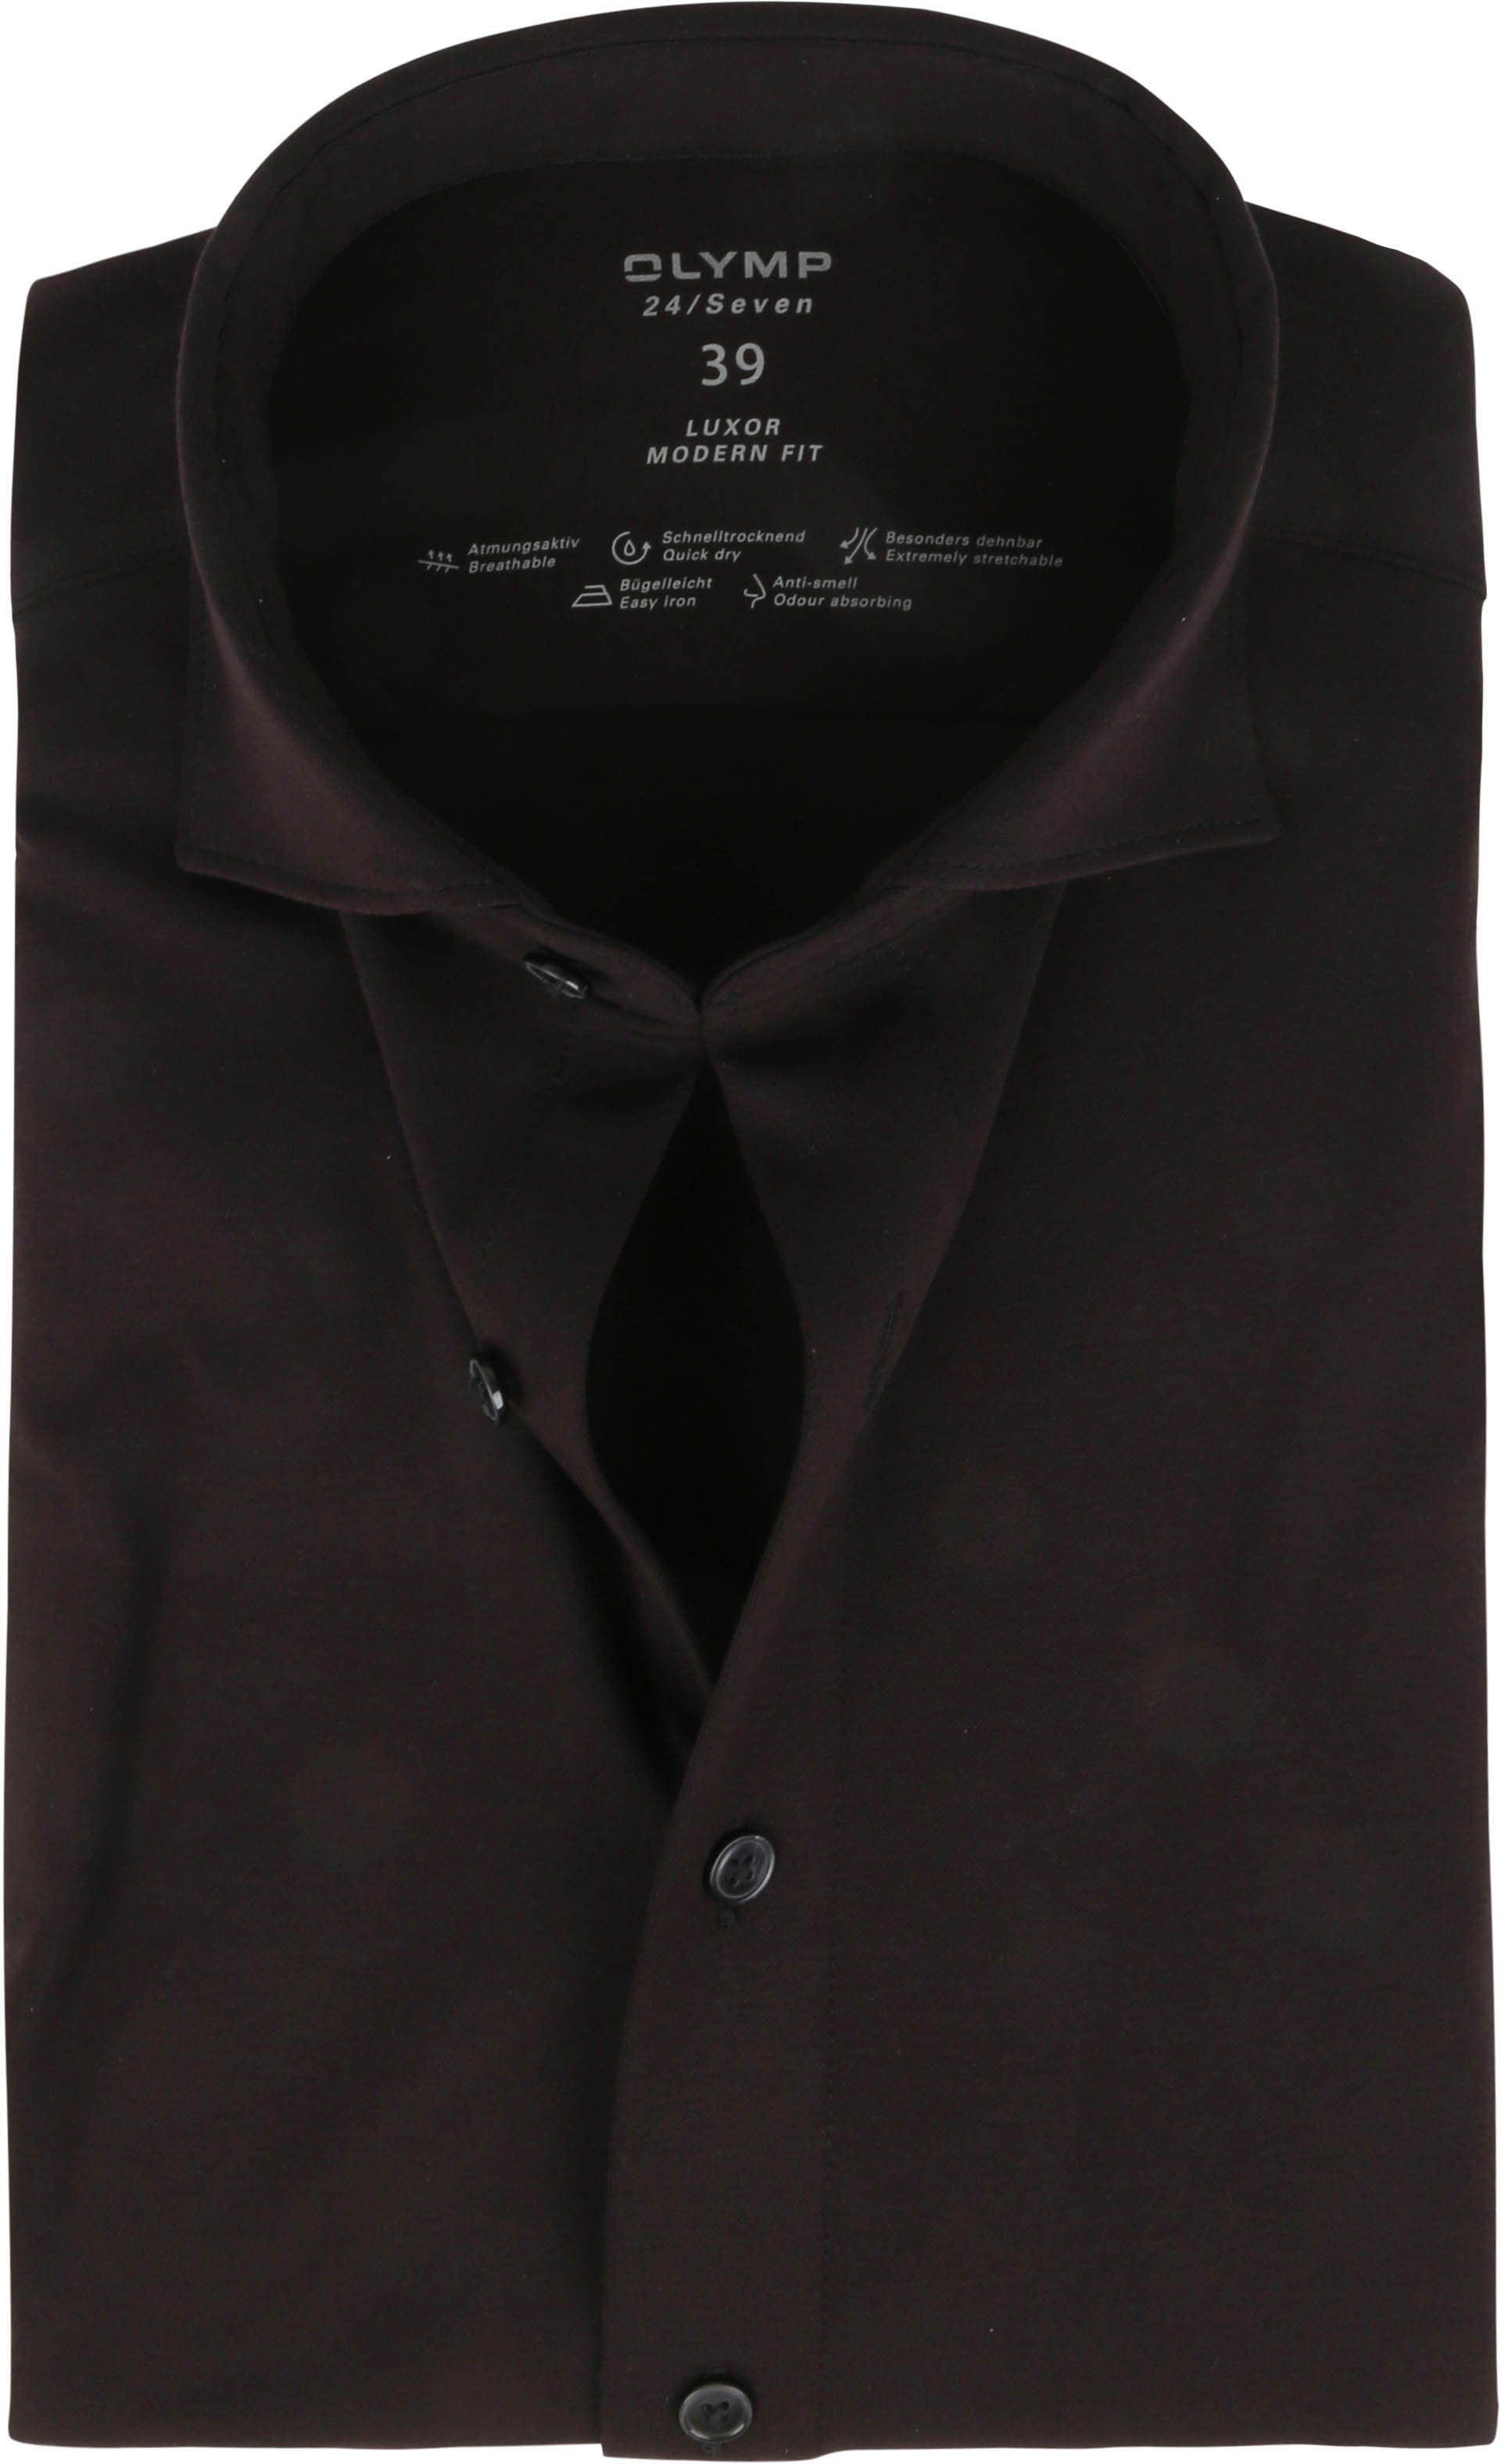 OLYMP Luxor Jersey Stretch Shirt 24/Seven Black size 15